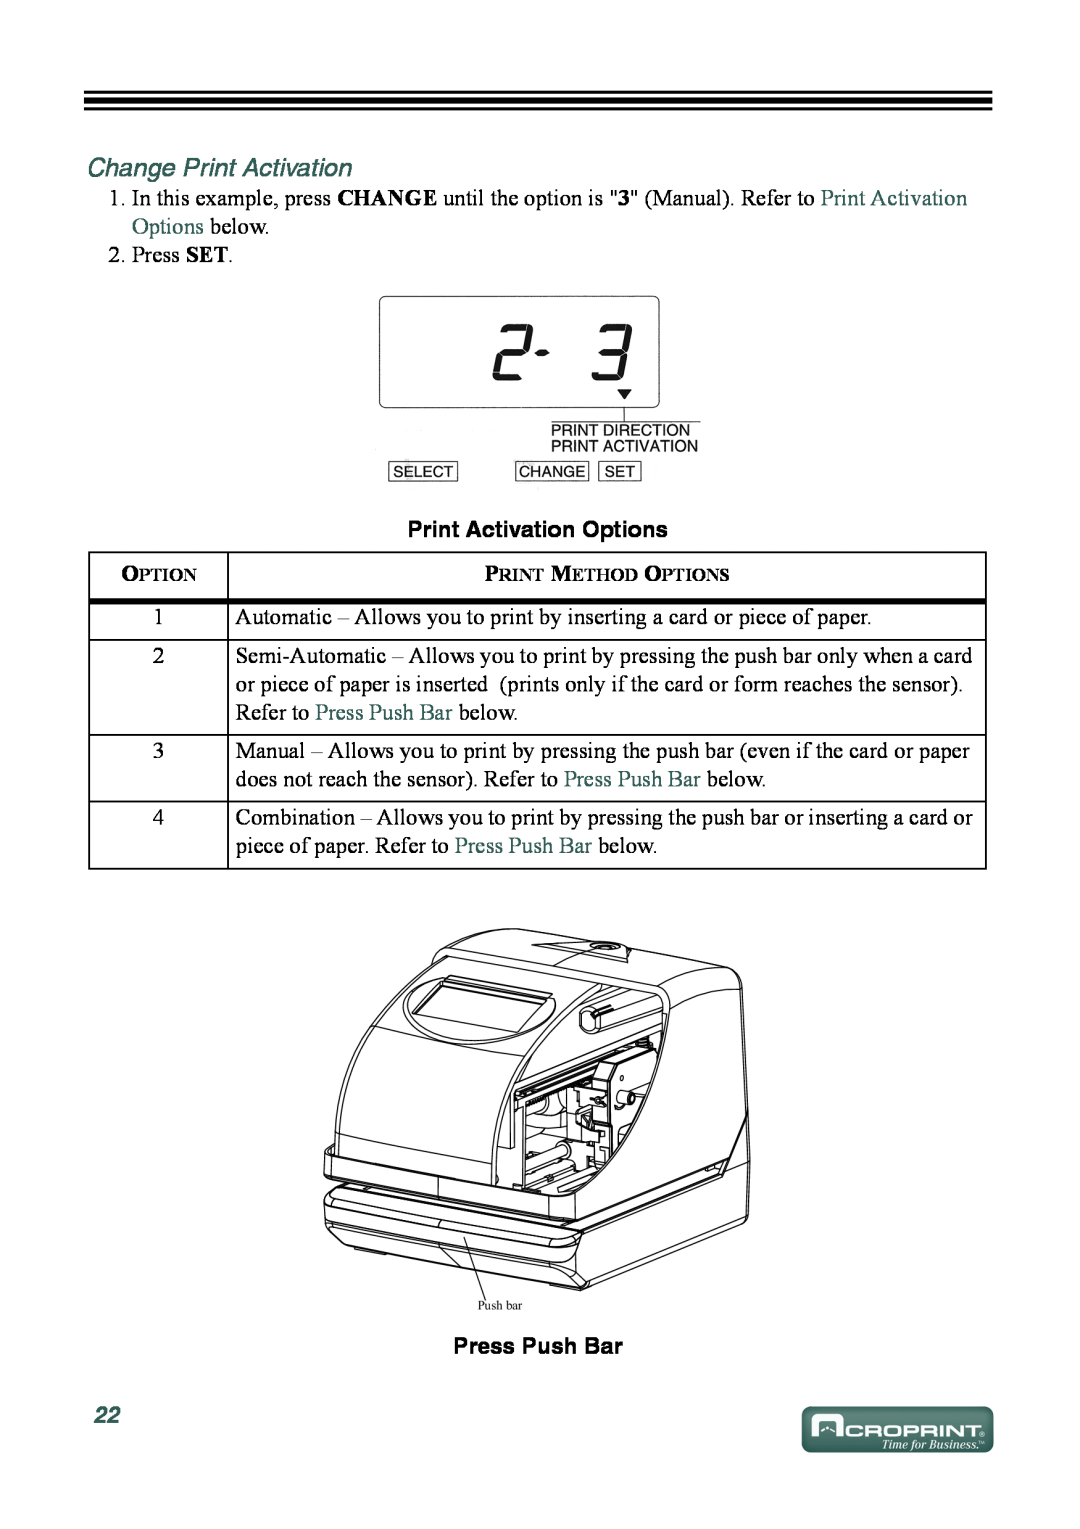 Acroprint ES700 user manual Change Print Activation, Print Activation Options, Press Push Bar 